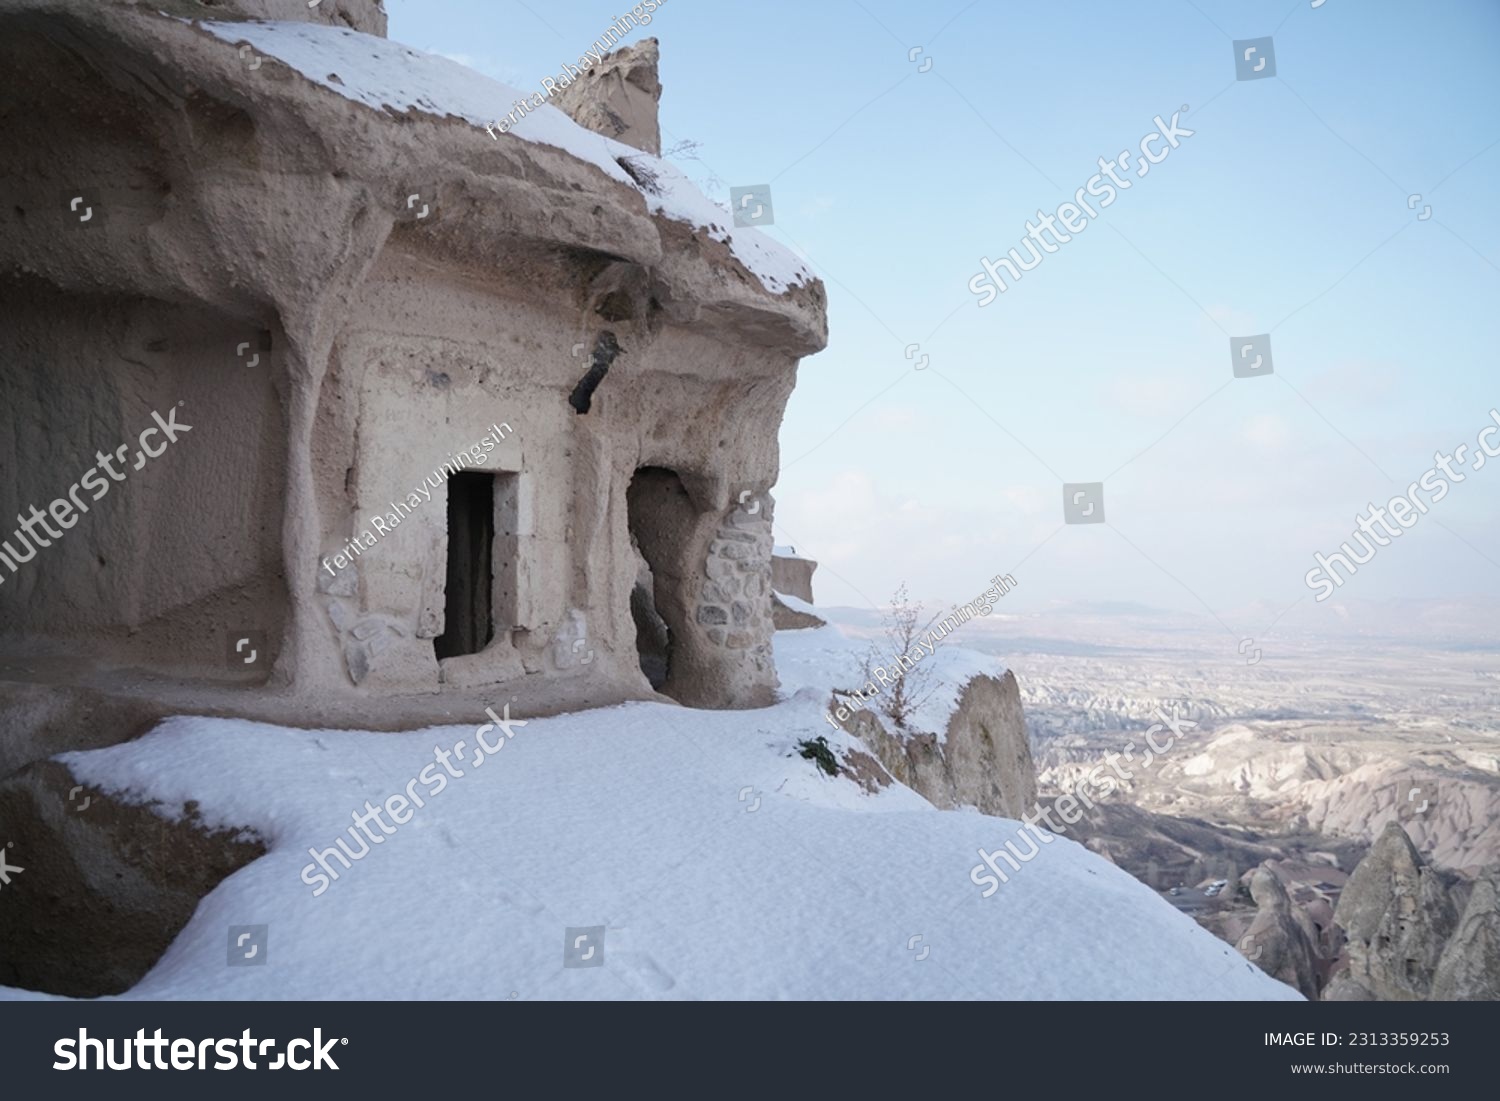 snowy hill cave houses in Uchisar city, Cappadocia, Turkey #2313359253